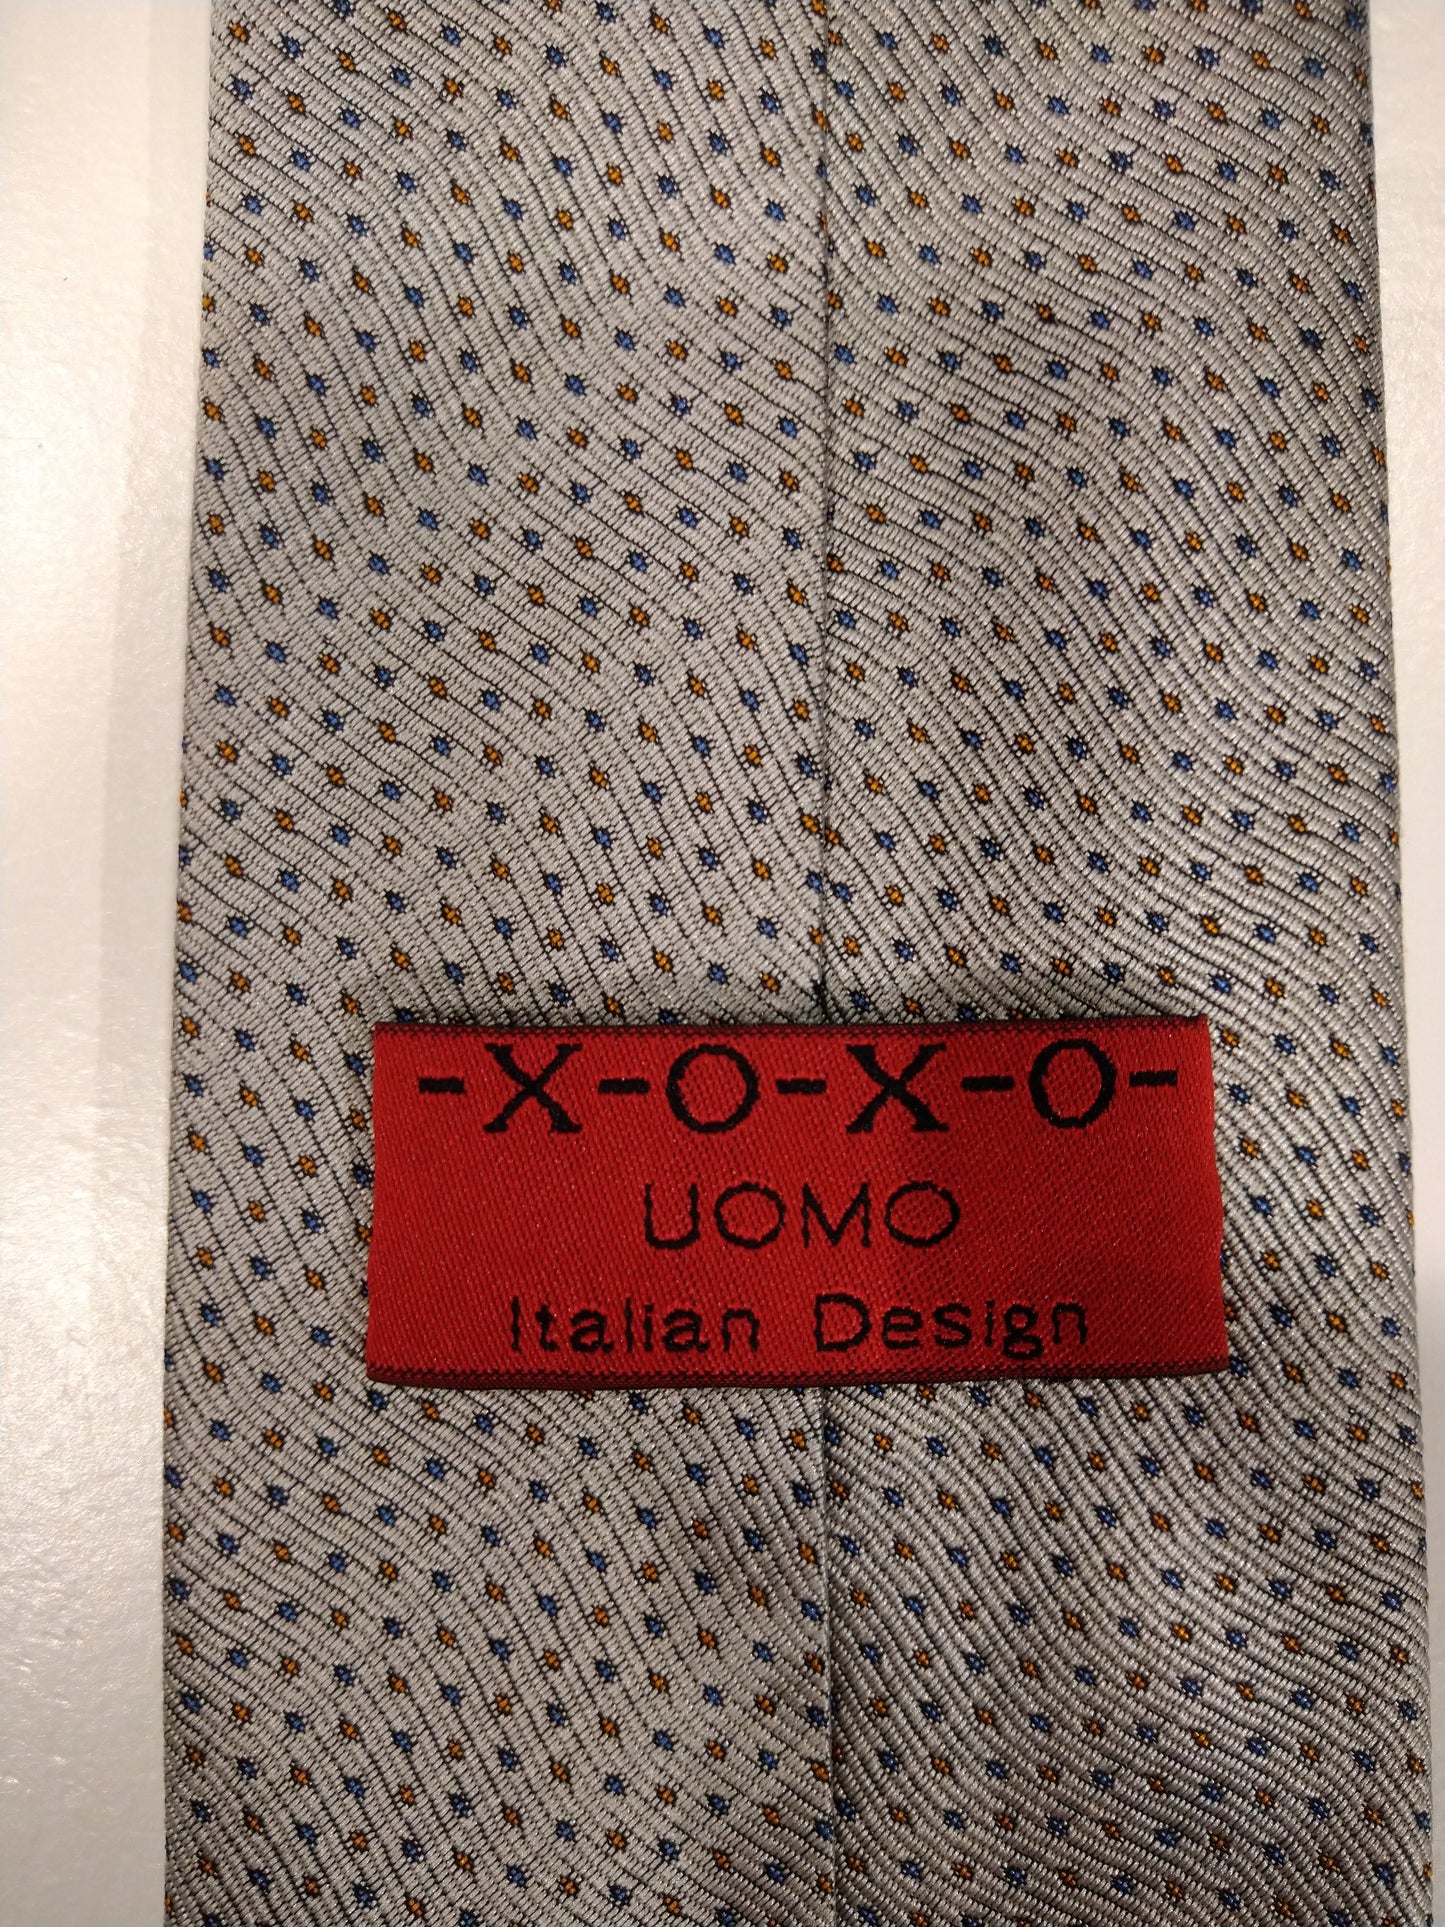 X-O-X-O Uomo Italian Design stropdas. Beige met blauw / bruin bolletjes motief.